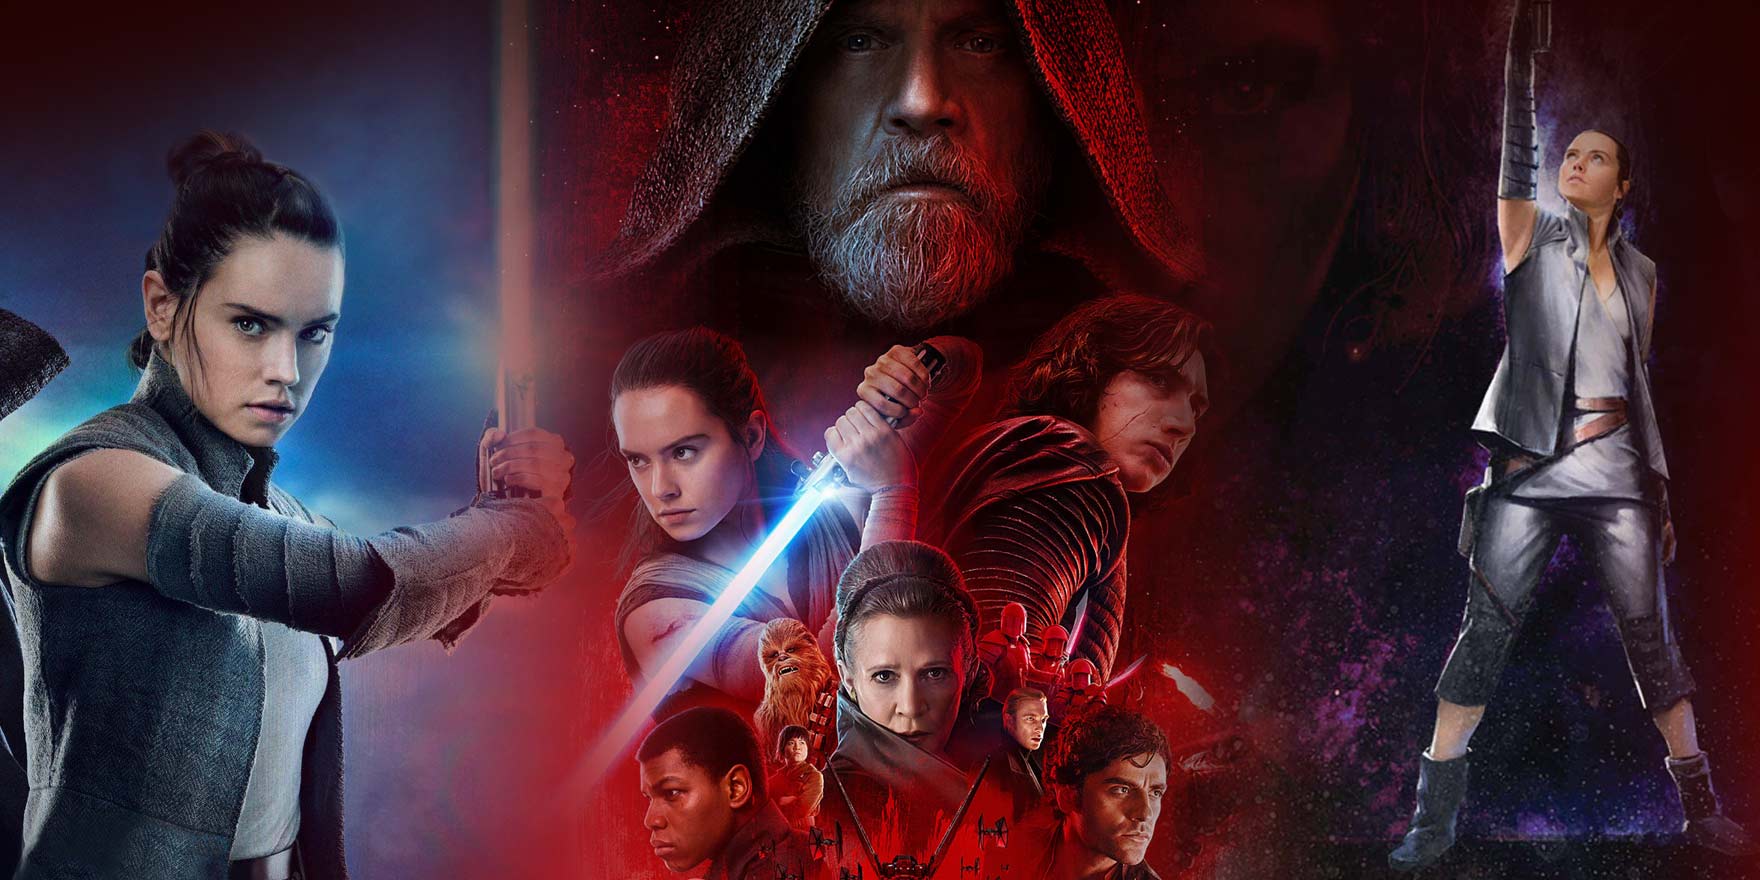 Star Wars: The Last Jedi - Header Image